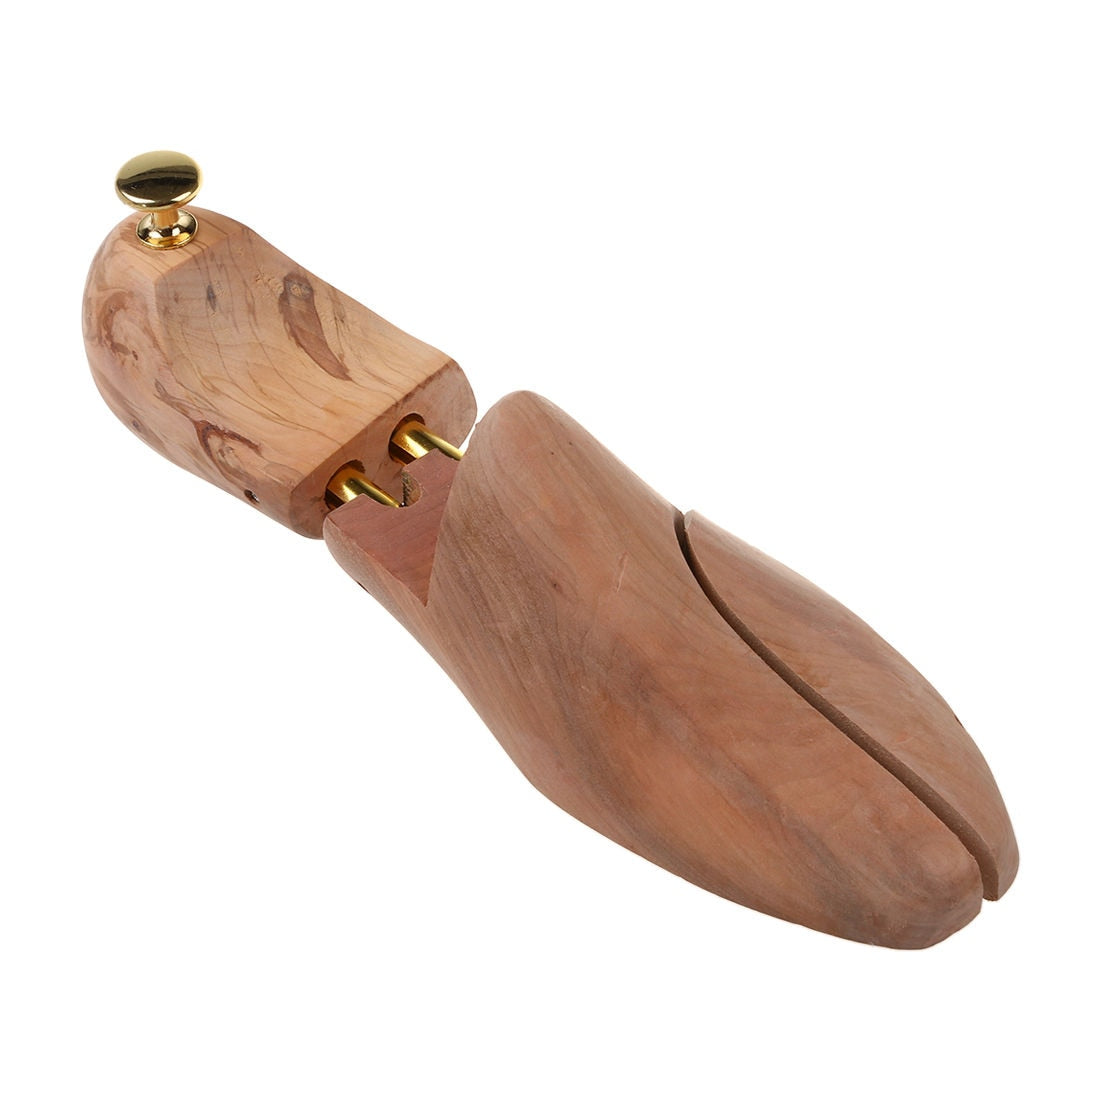 1 pair High Quality wood shoe trees Wooden Adjustable Shoe Shaper  Keeper Men's Shoe Tree EU 43-44 - ebowsos